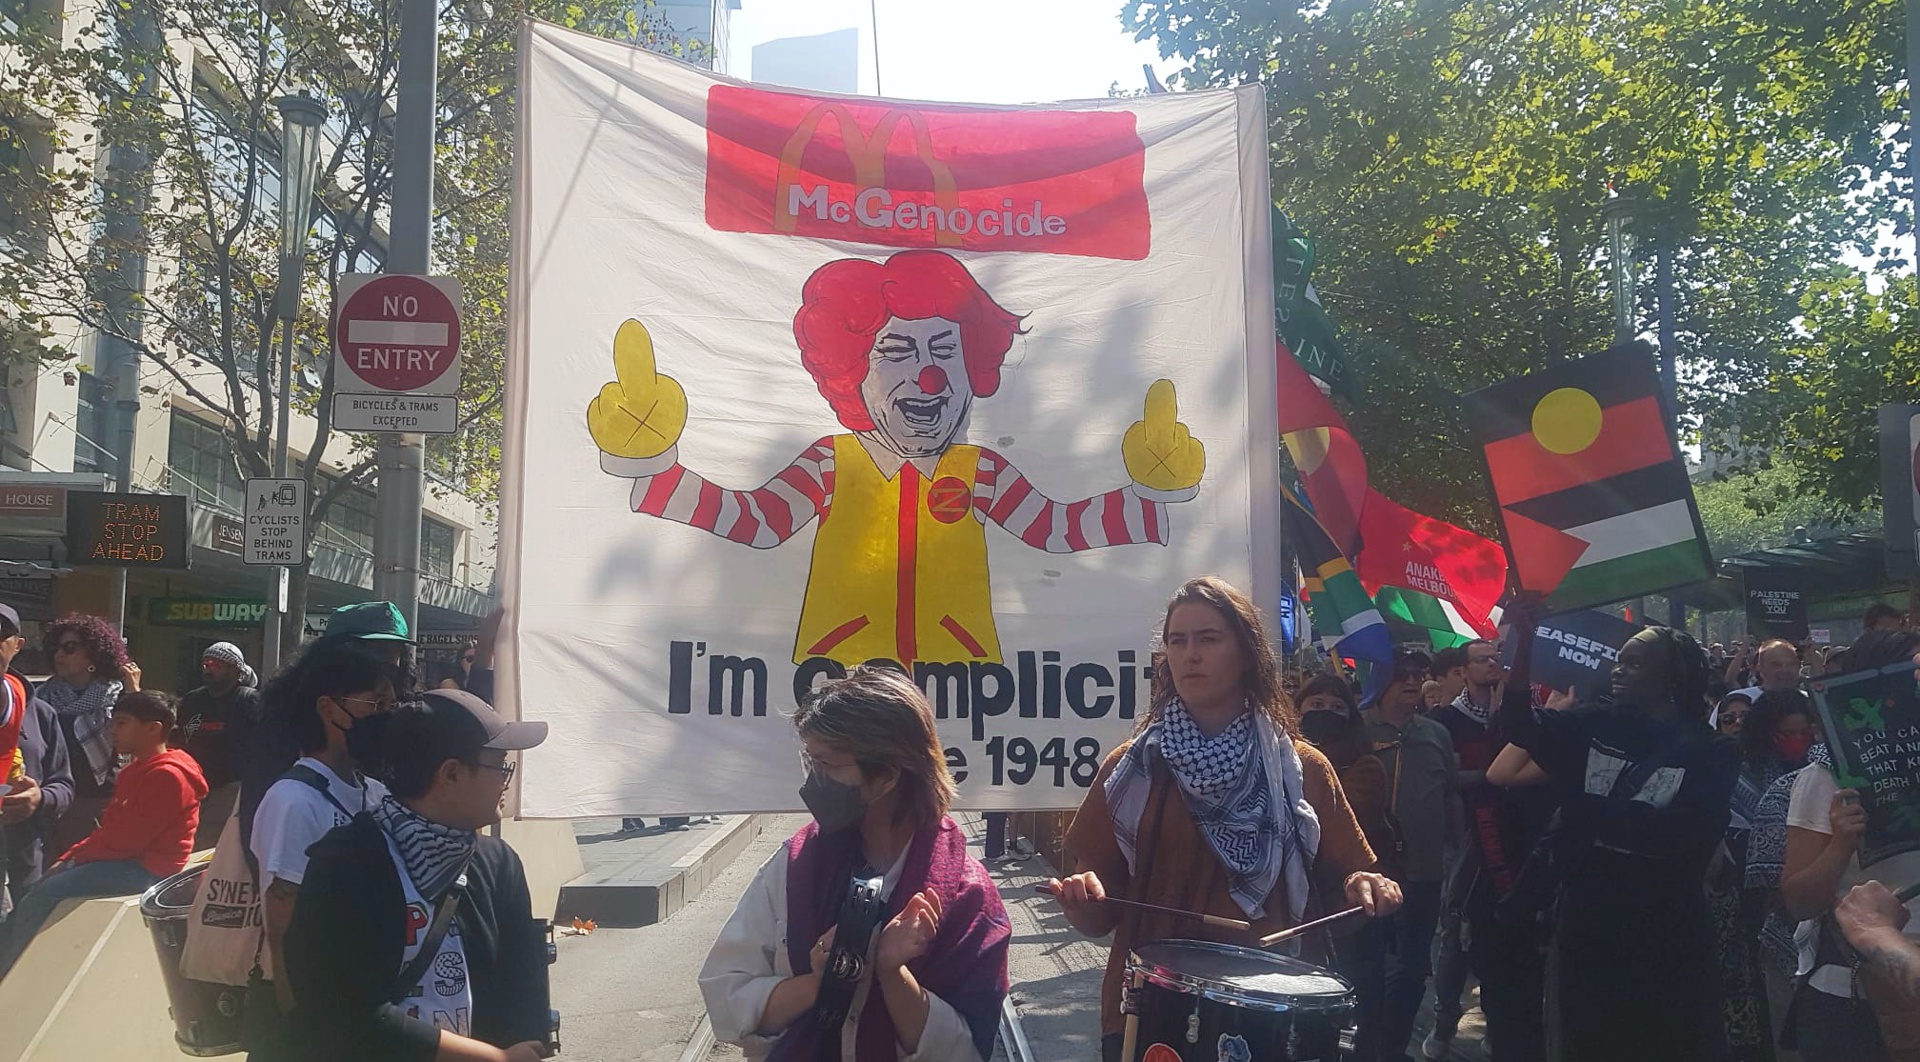 McDonalds is complicit in genocide, Naarm/Melbourne, March 31